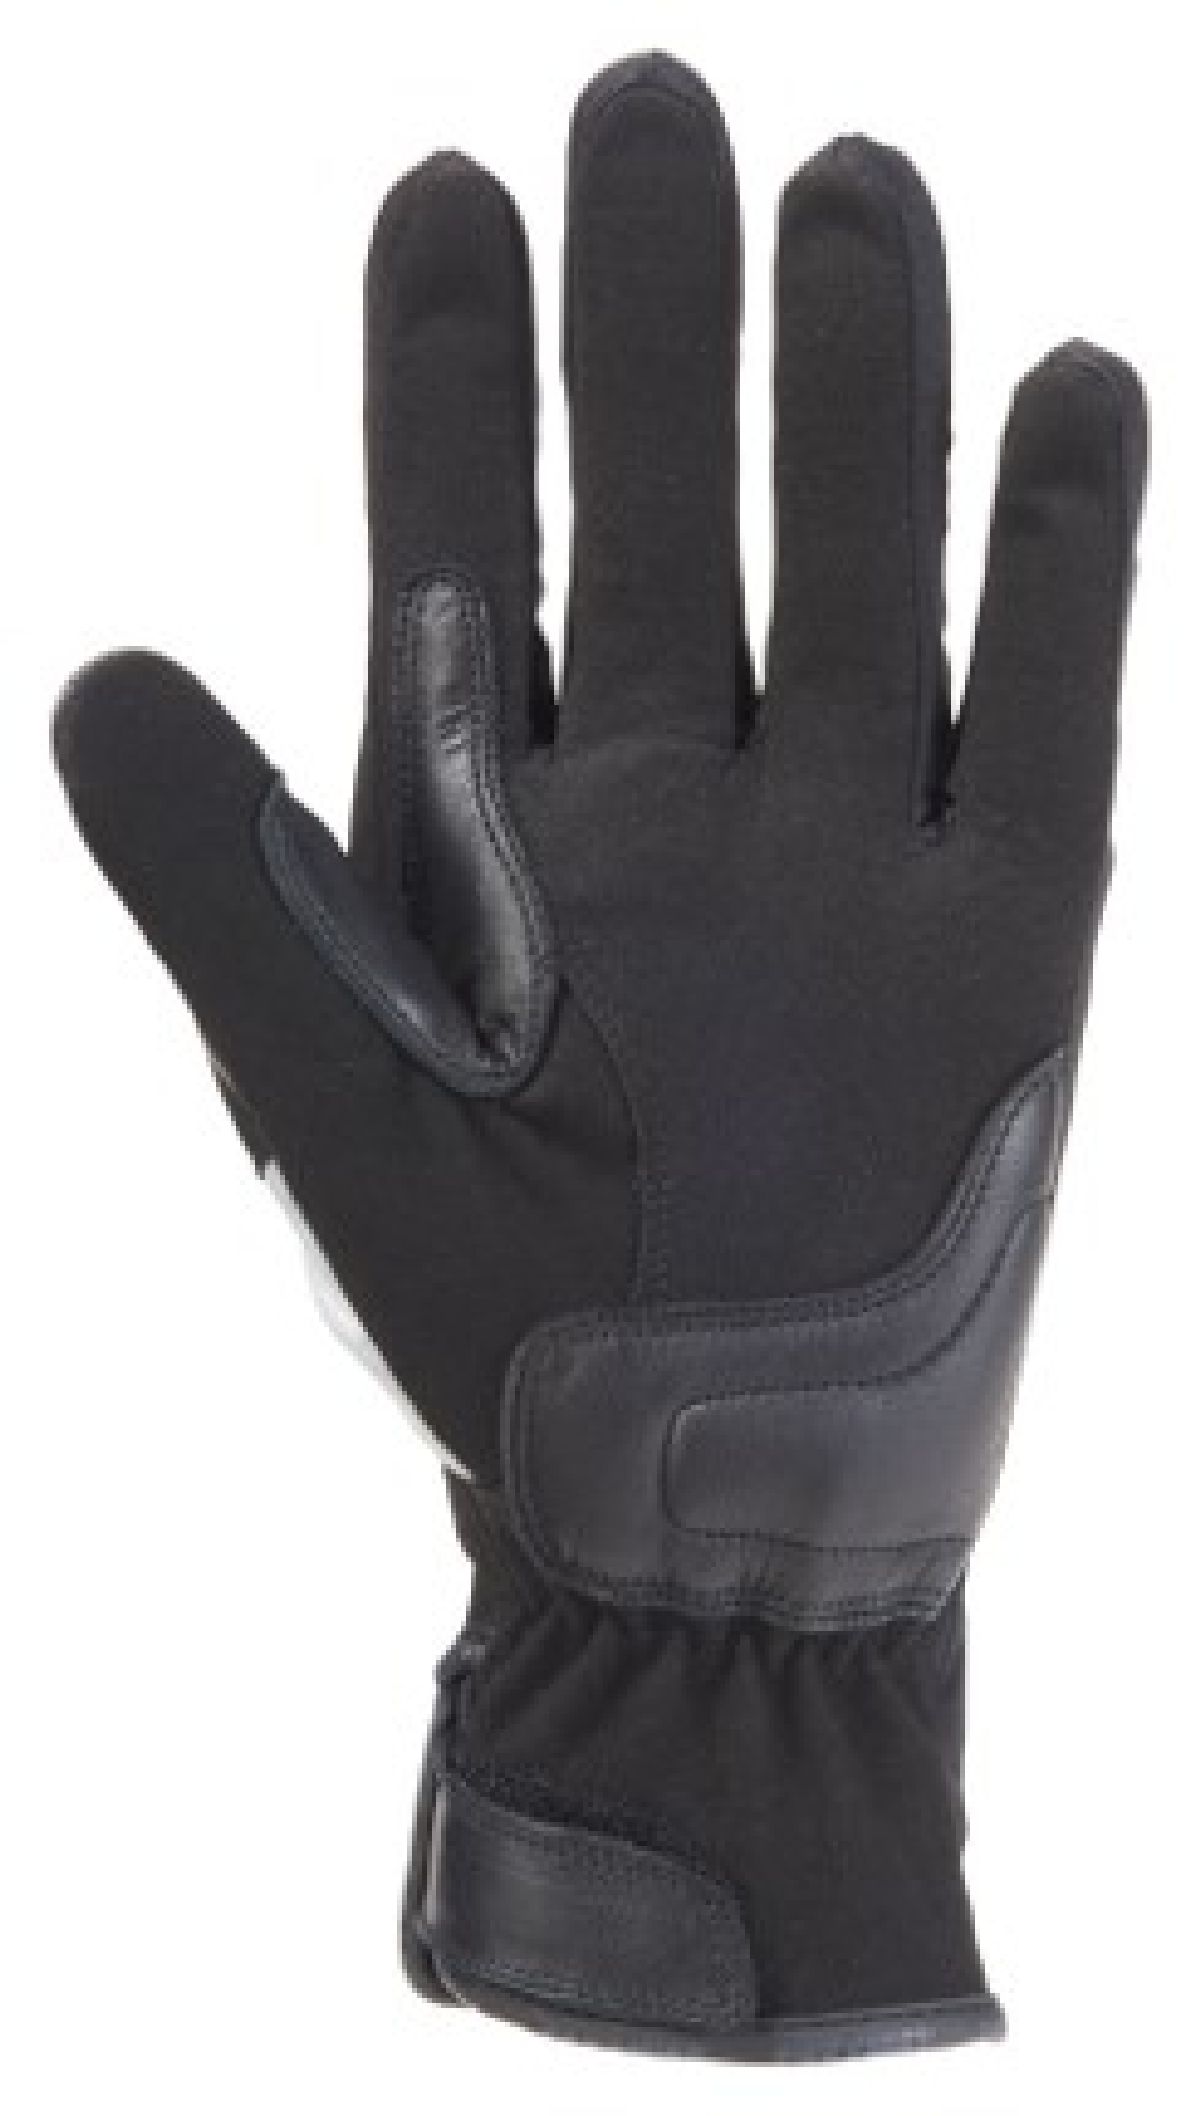 Easy II Handschuhe schwarz/grau S